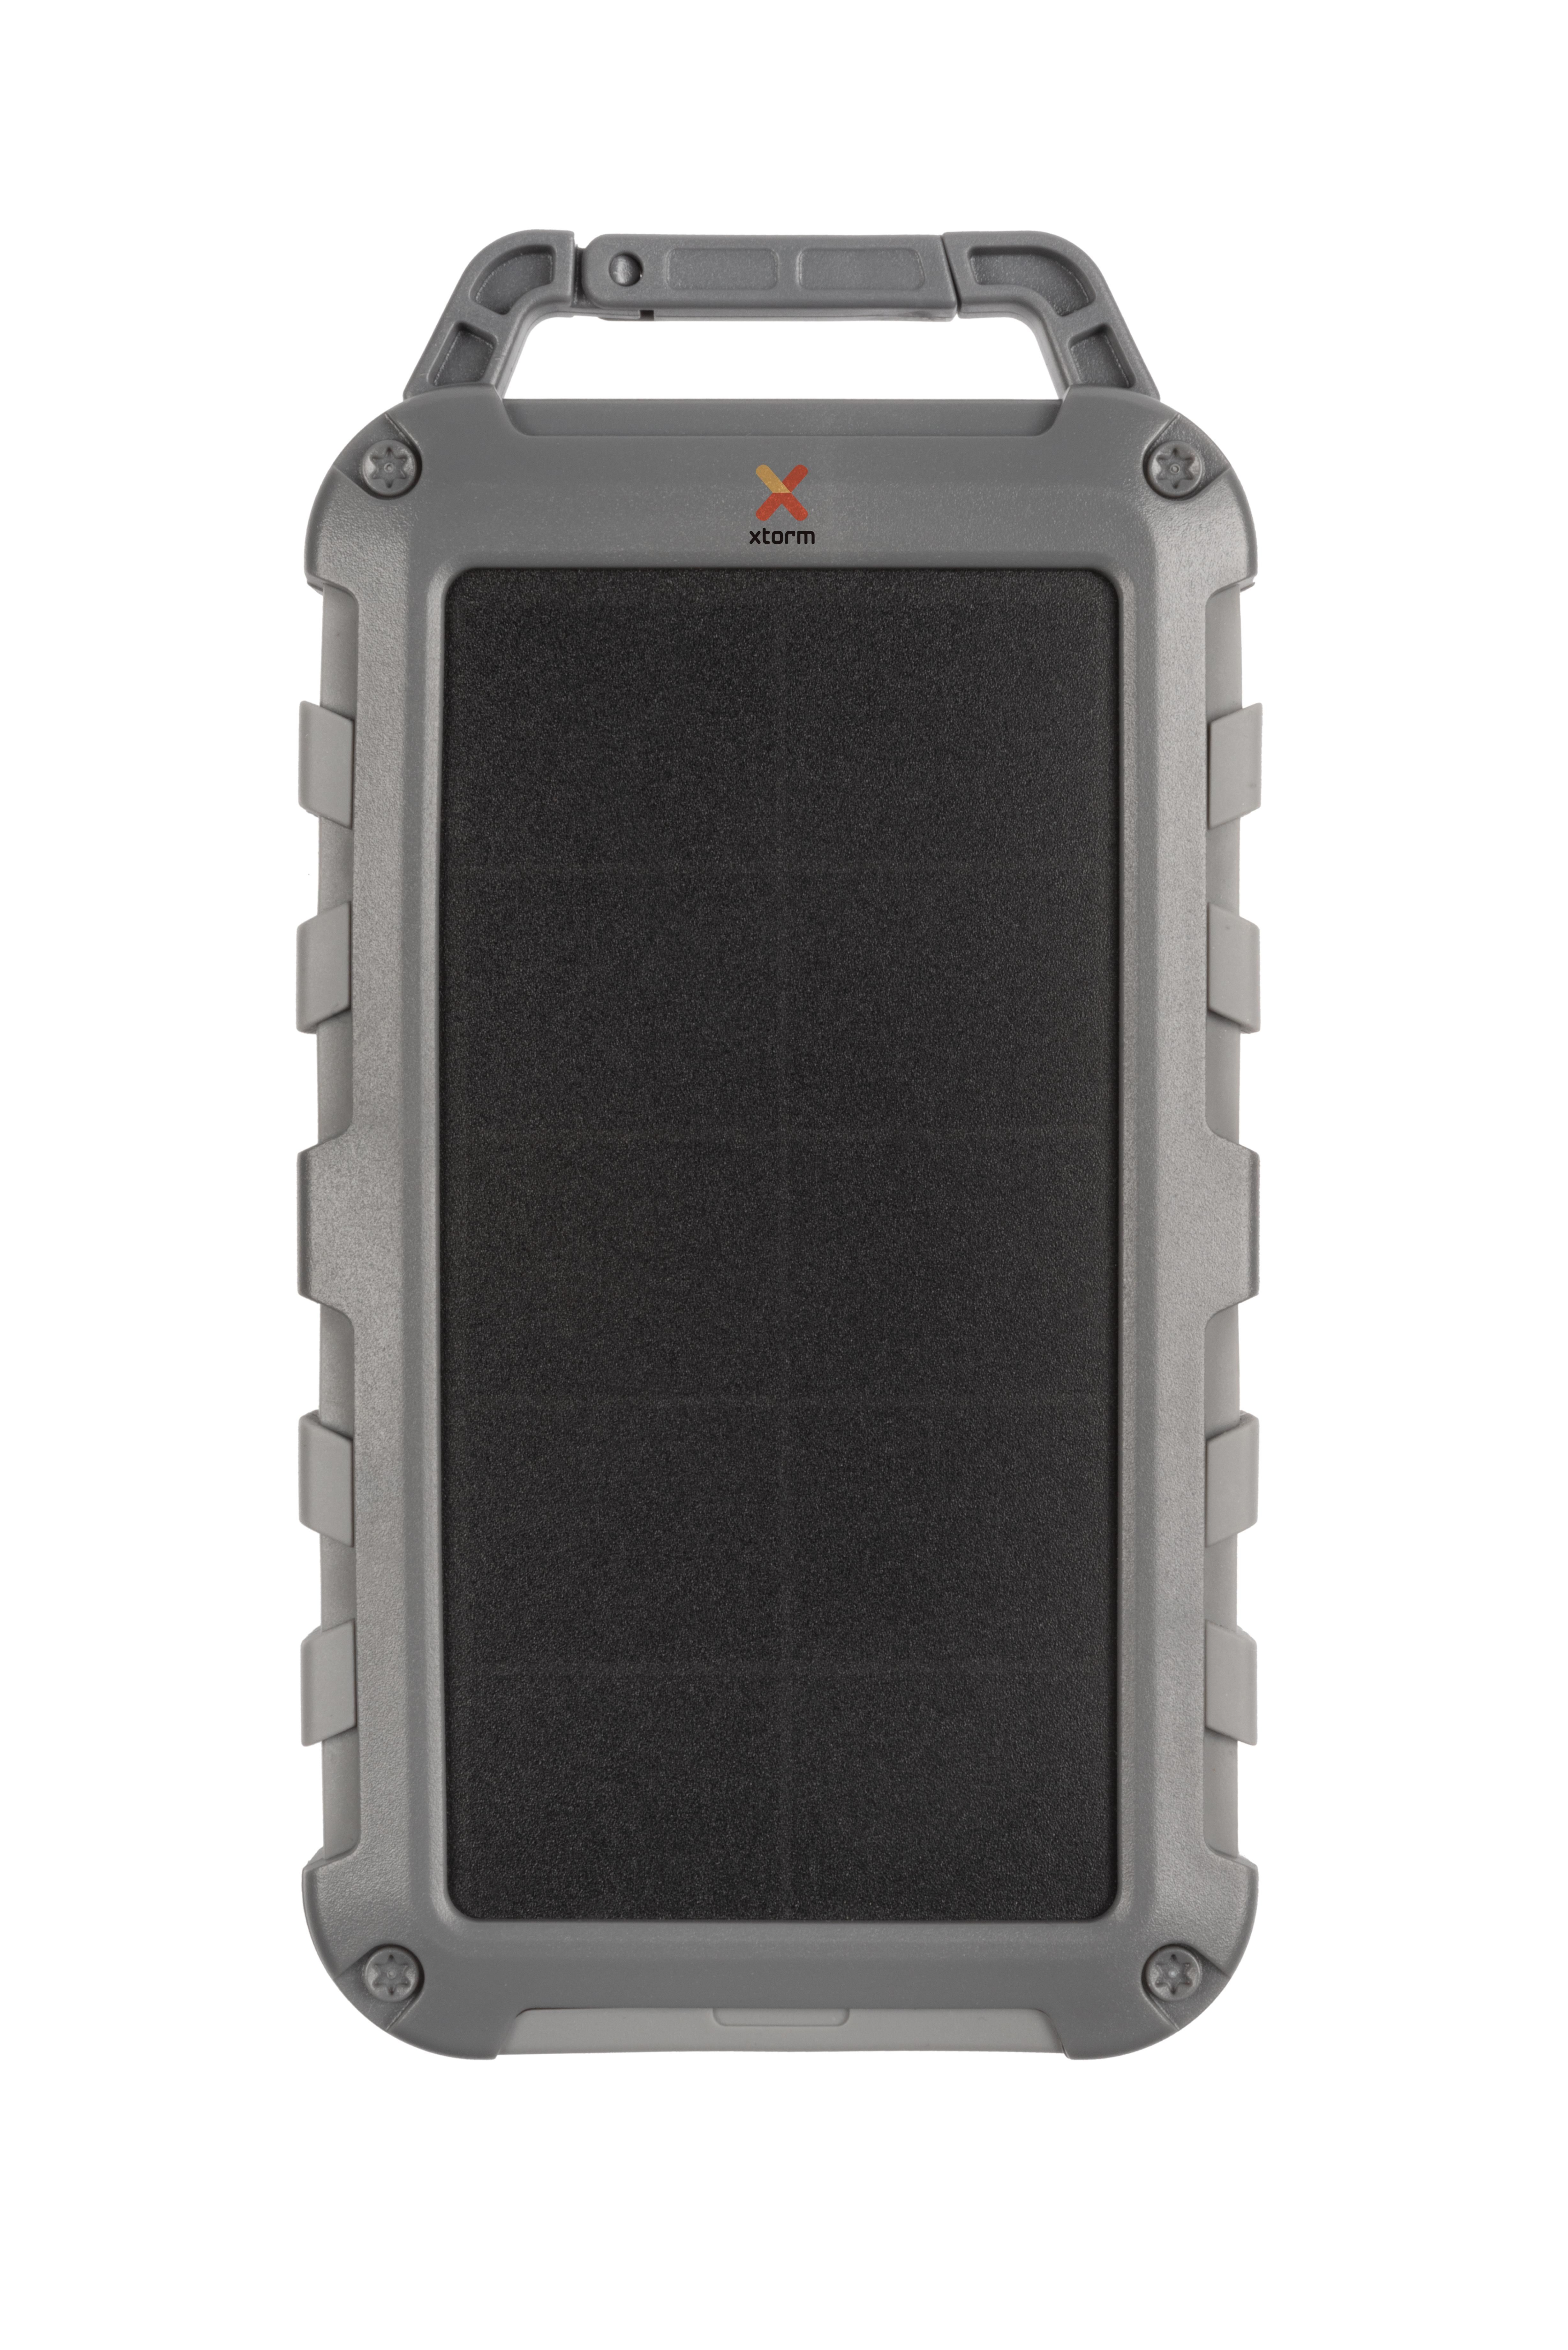 Xtorm FS405 Solar Power